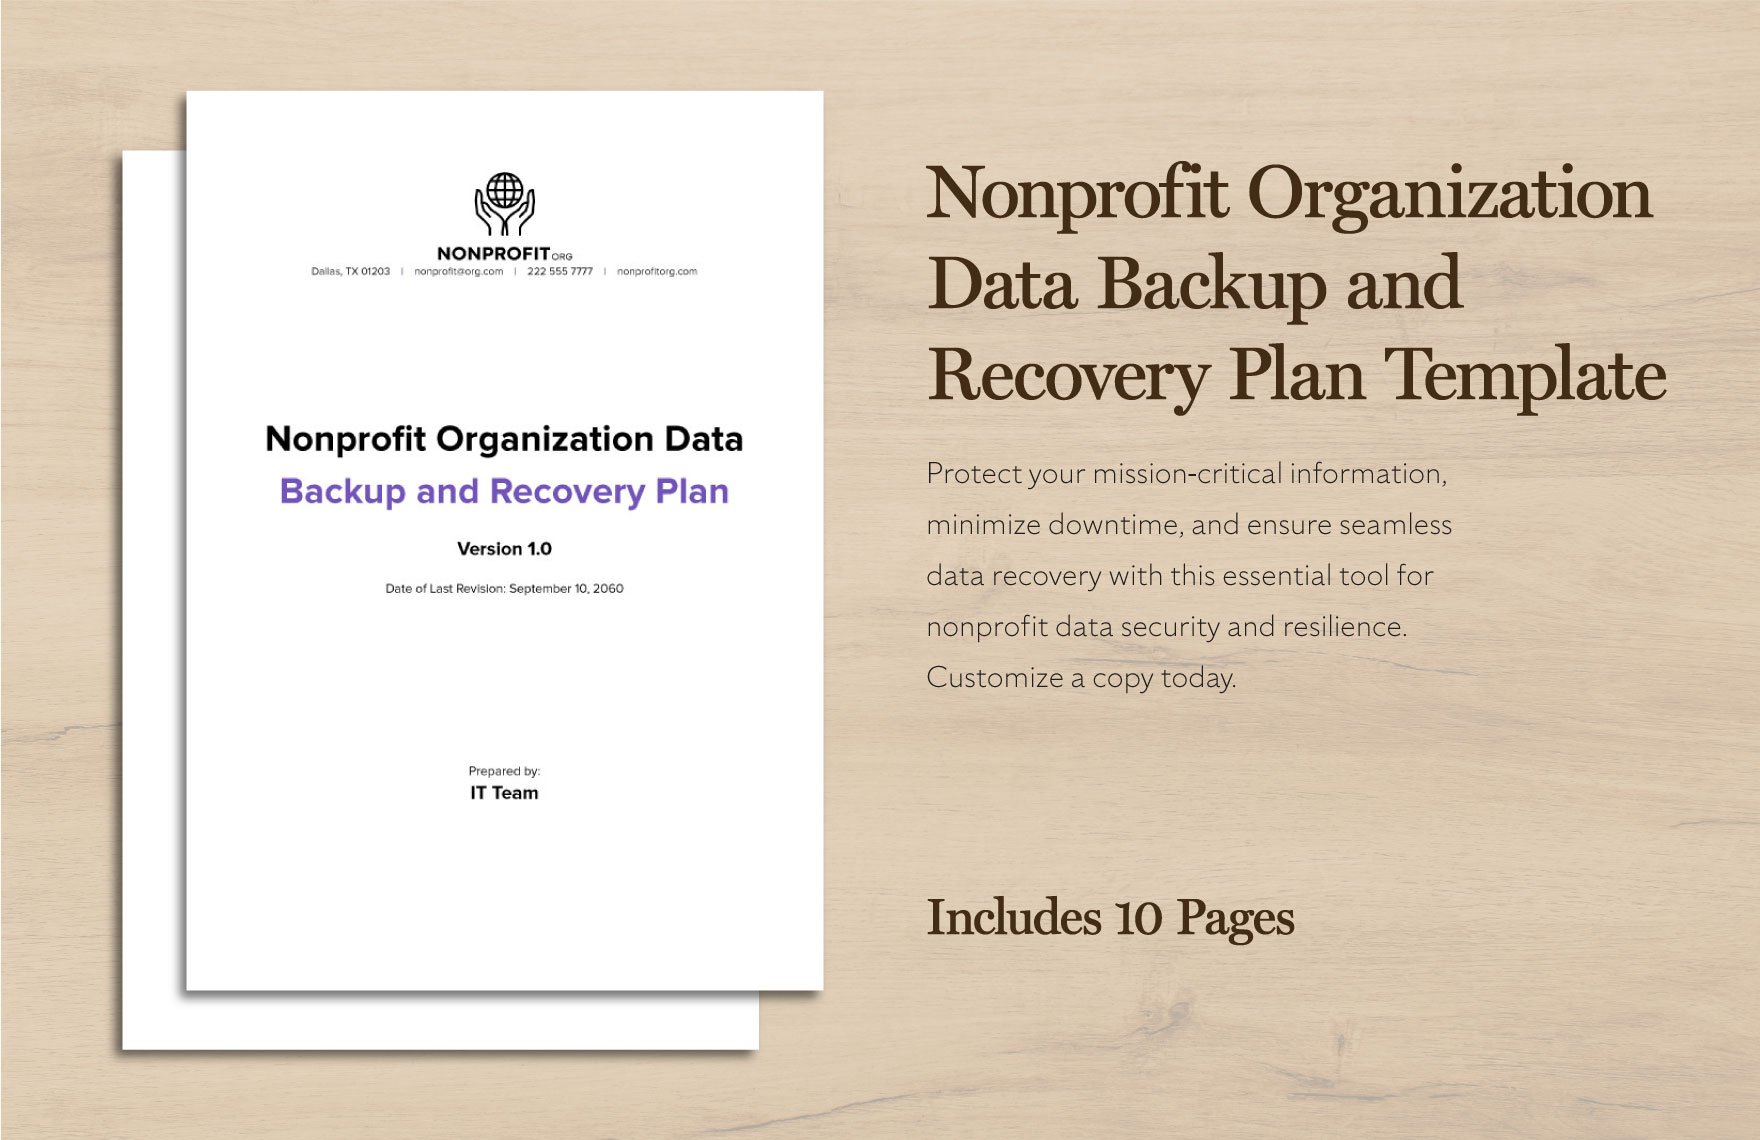 Nonprofit Organization Data Backup and Recovery Plan Template